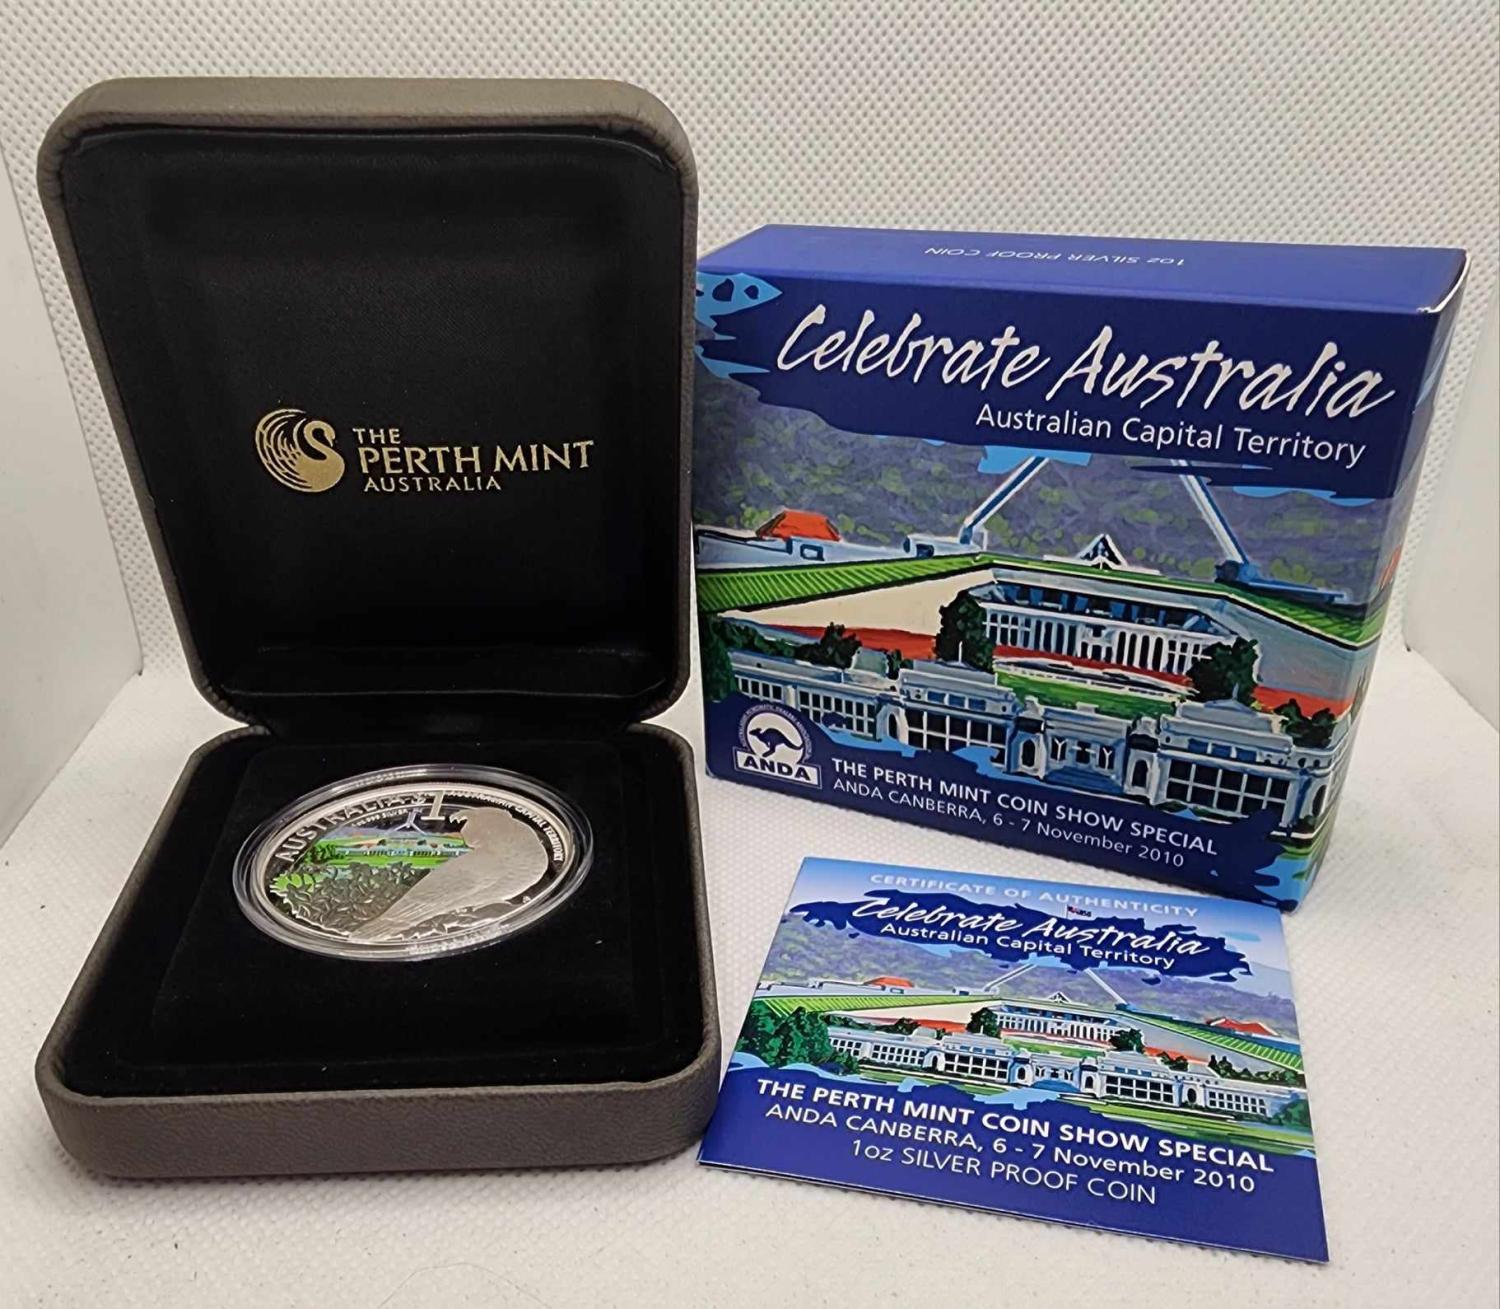 Thumbnail for 2010 Perth Mint Coin Show Special ANDA - Celebrate Australia Australian Capital Territory